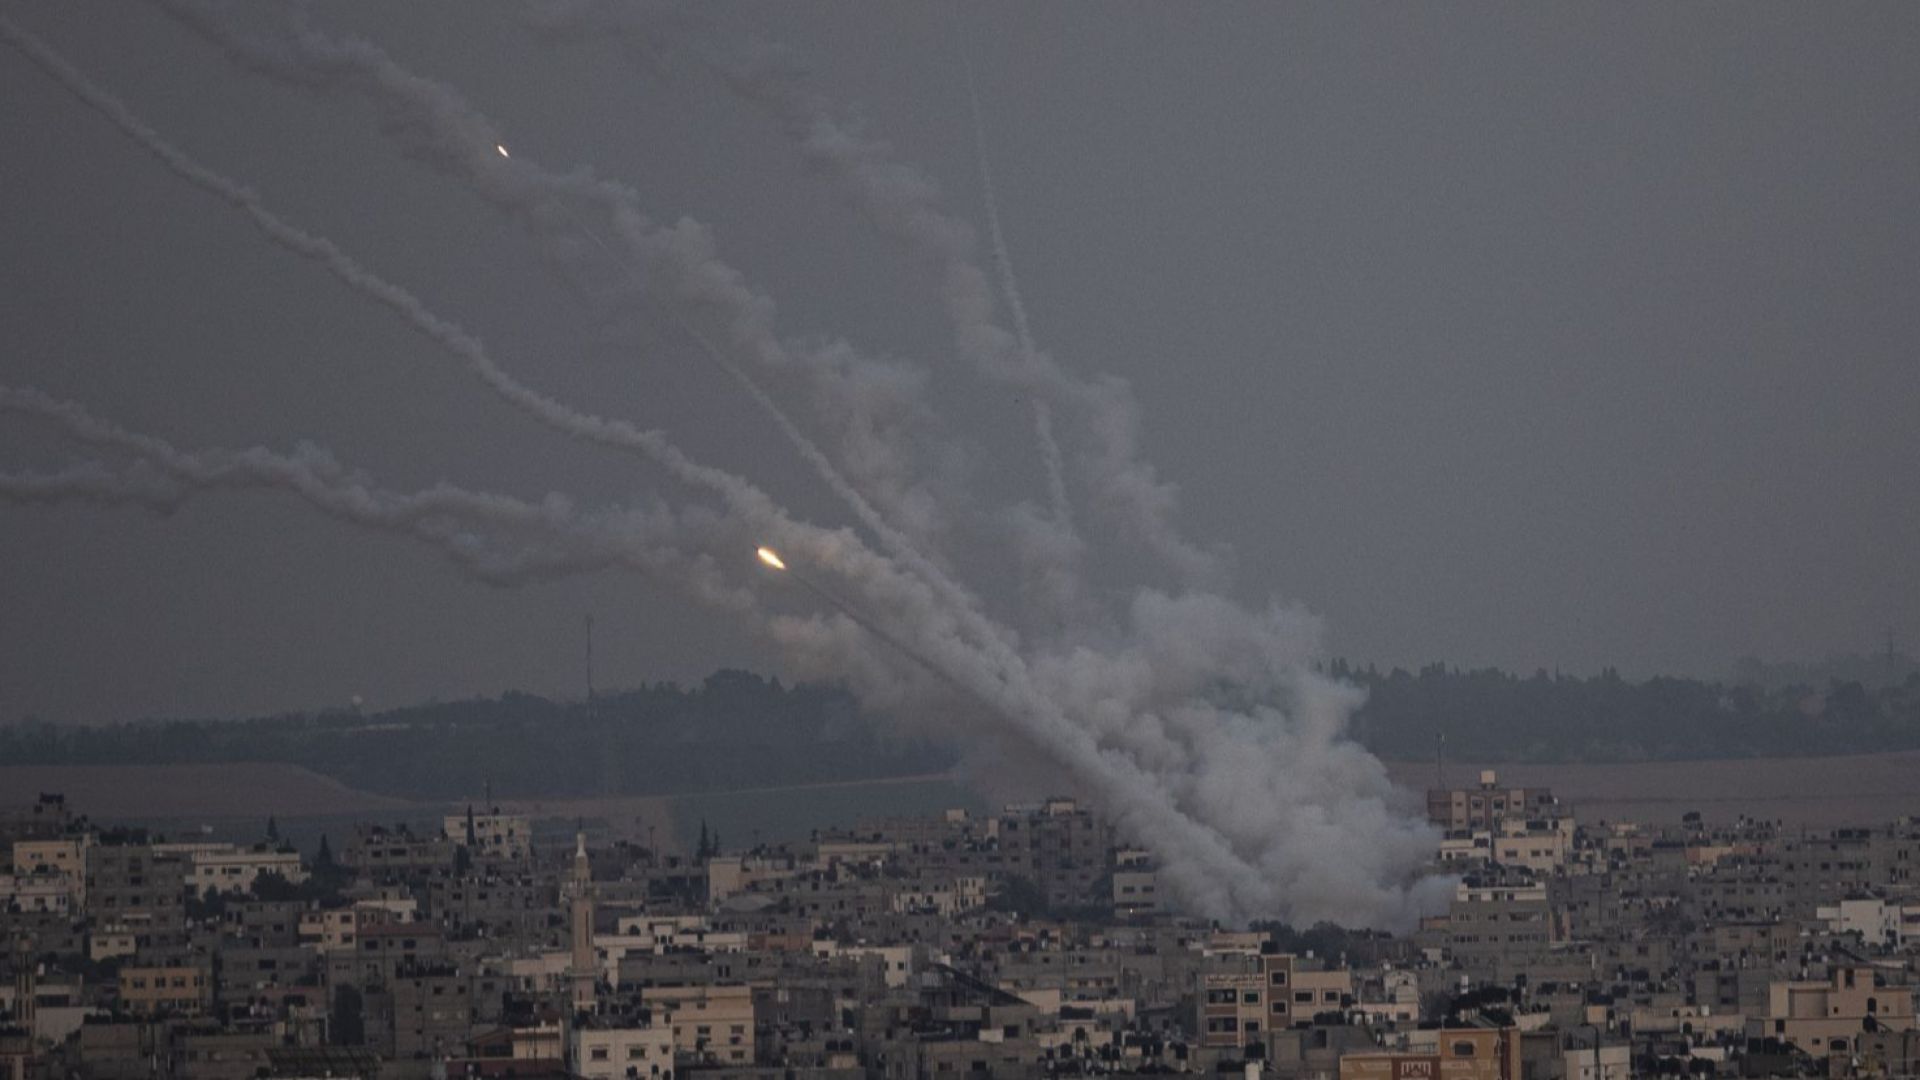 Минути след часа на ултиматума: Ракети полетяха между Израел и Газа (видео)